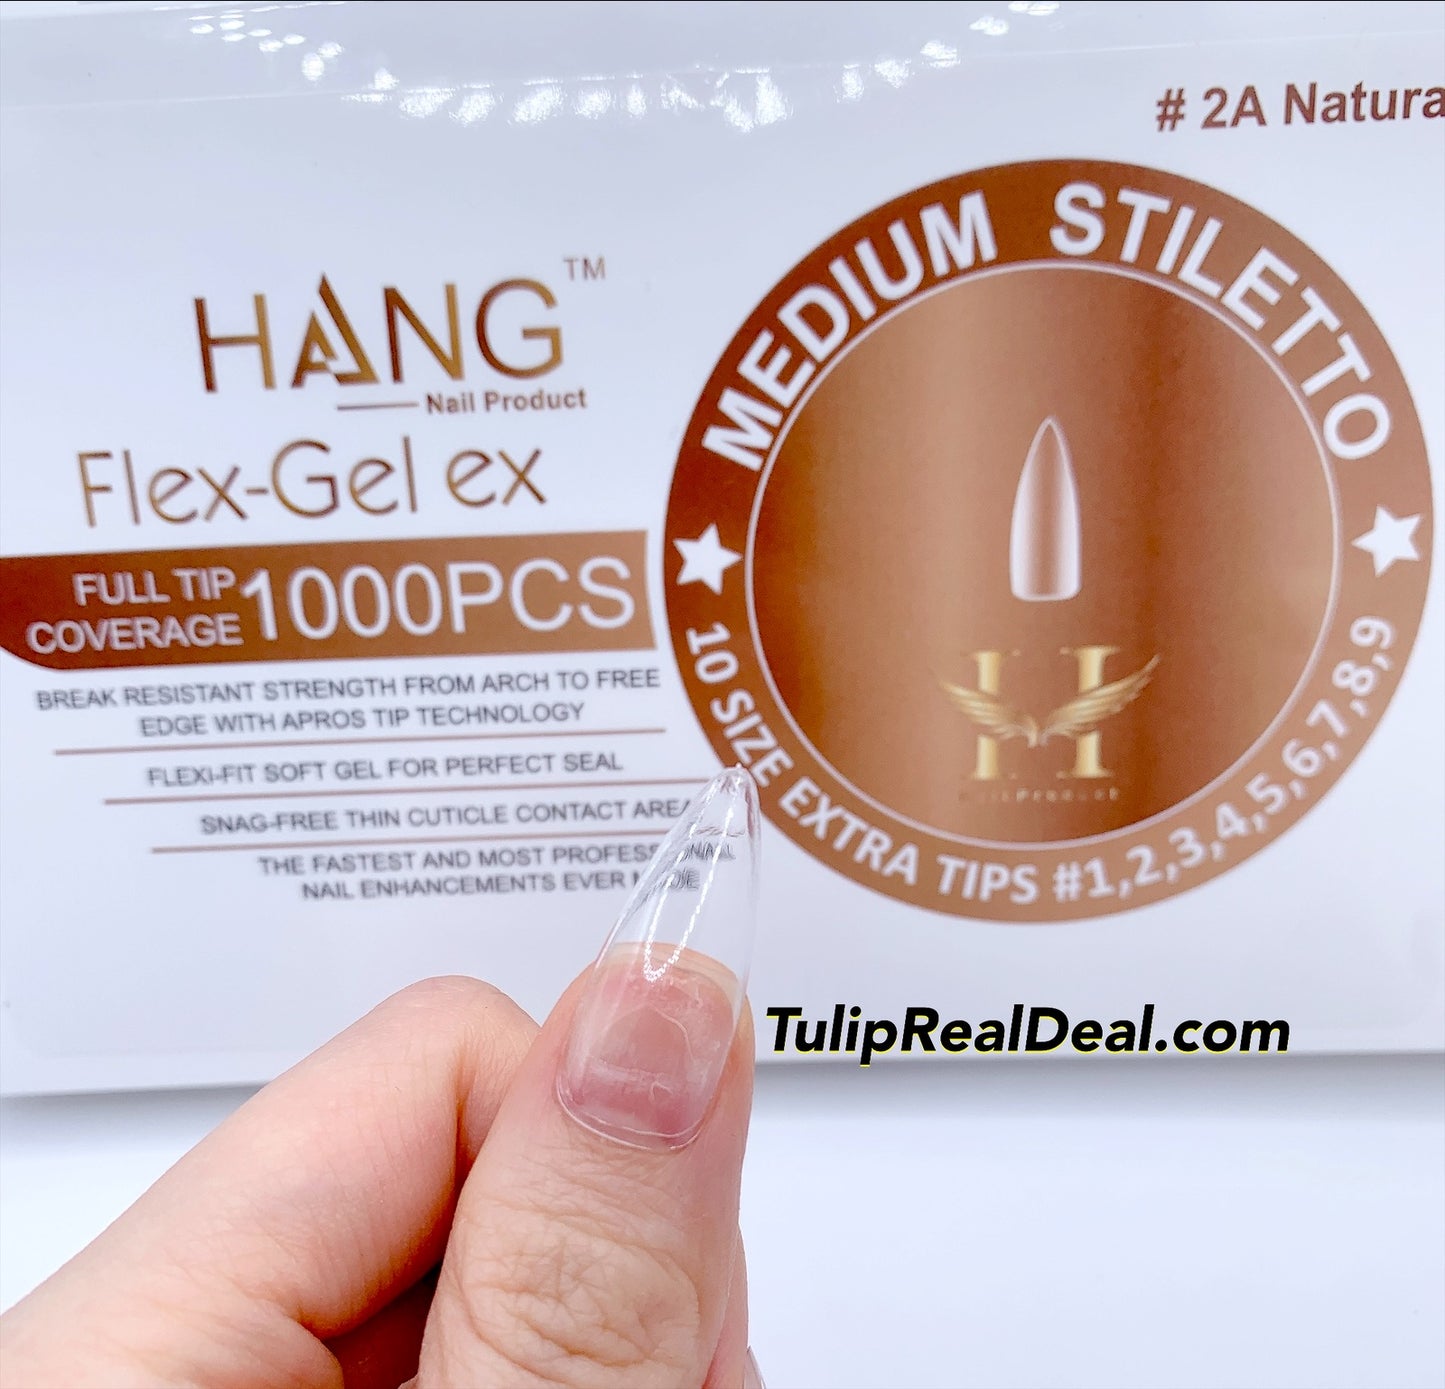 HANG MEDIUM STILETTO Flex Gel X Full Cover BOX OF TIPS 1000pcs